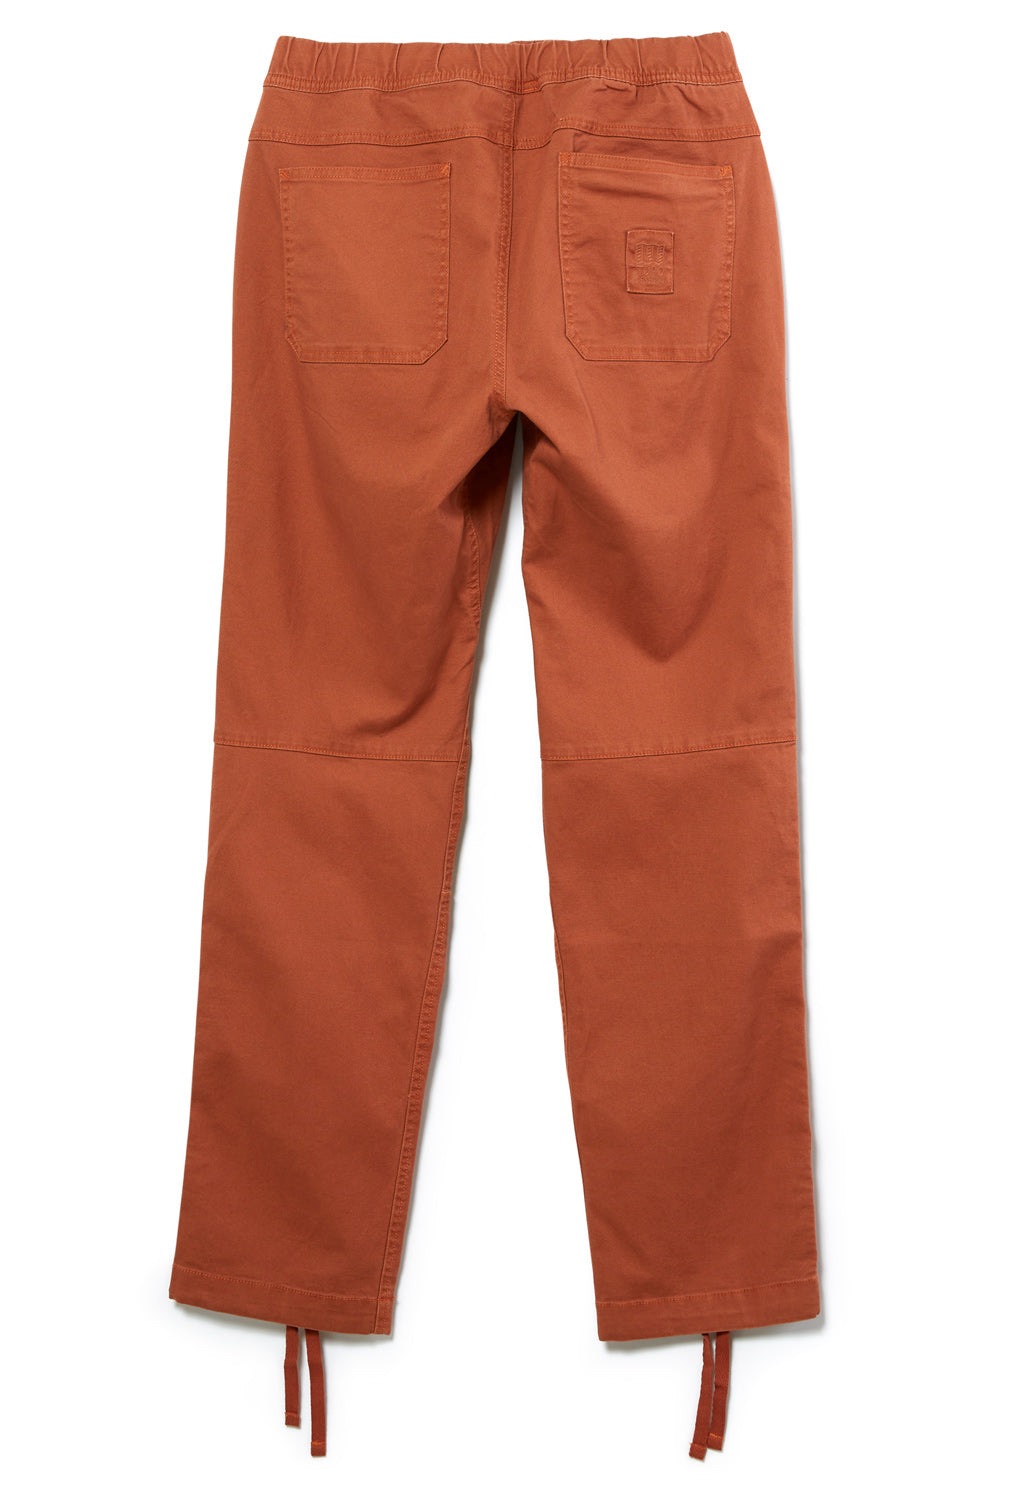 Topo Designs Men's Dirt Pants - Brick